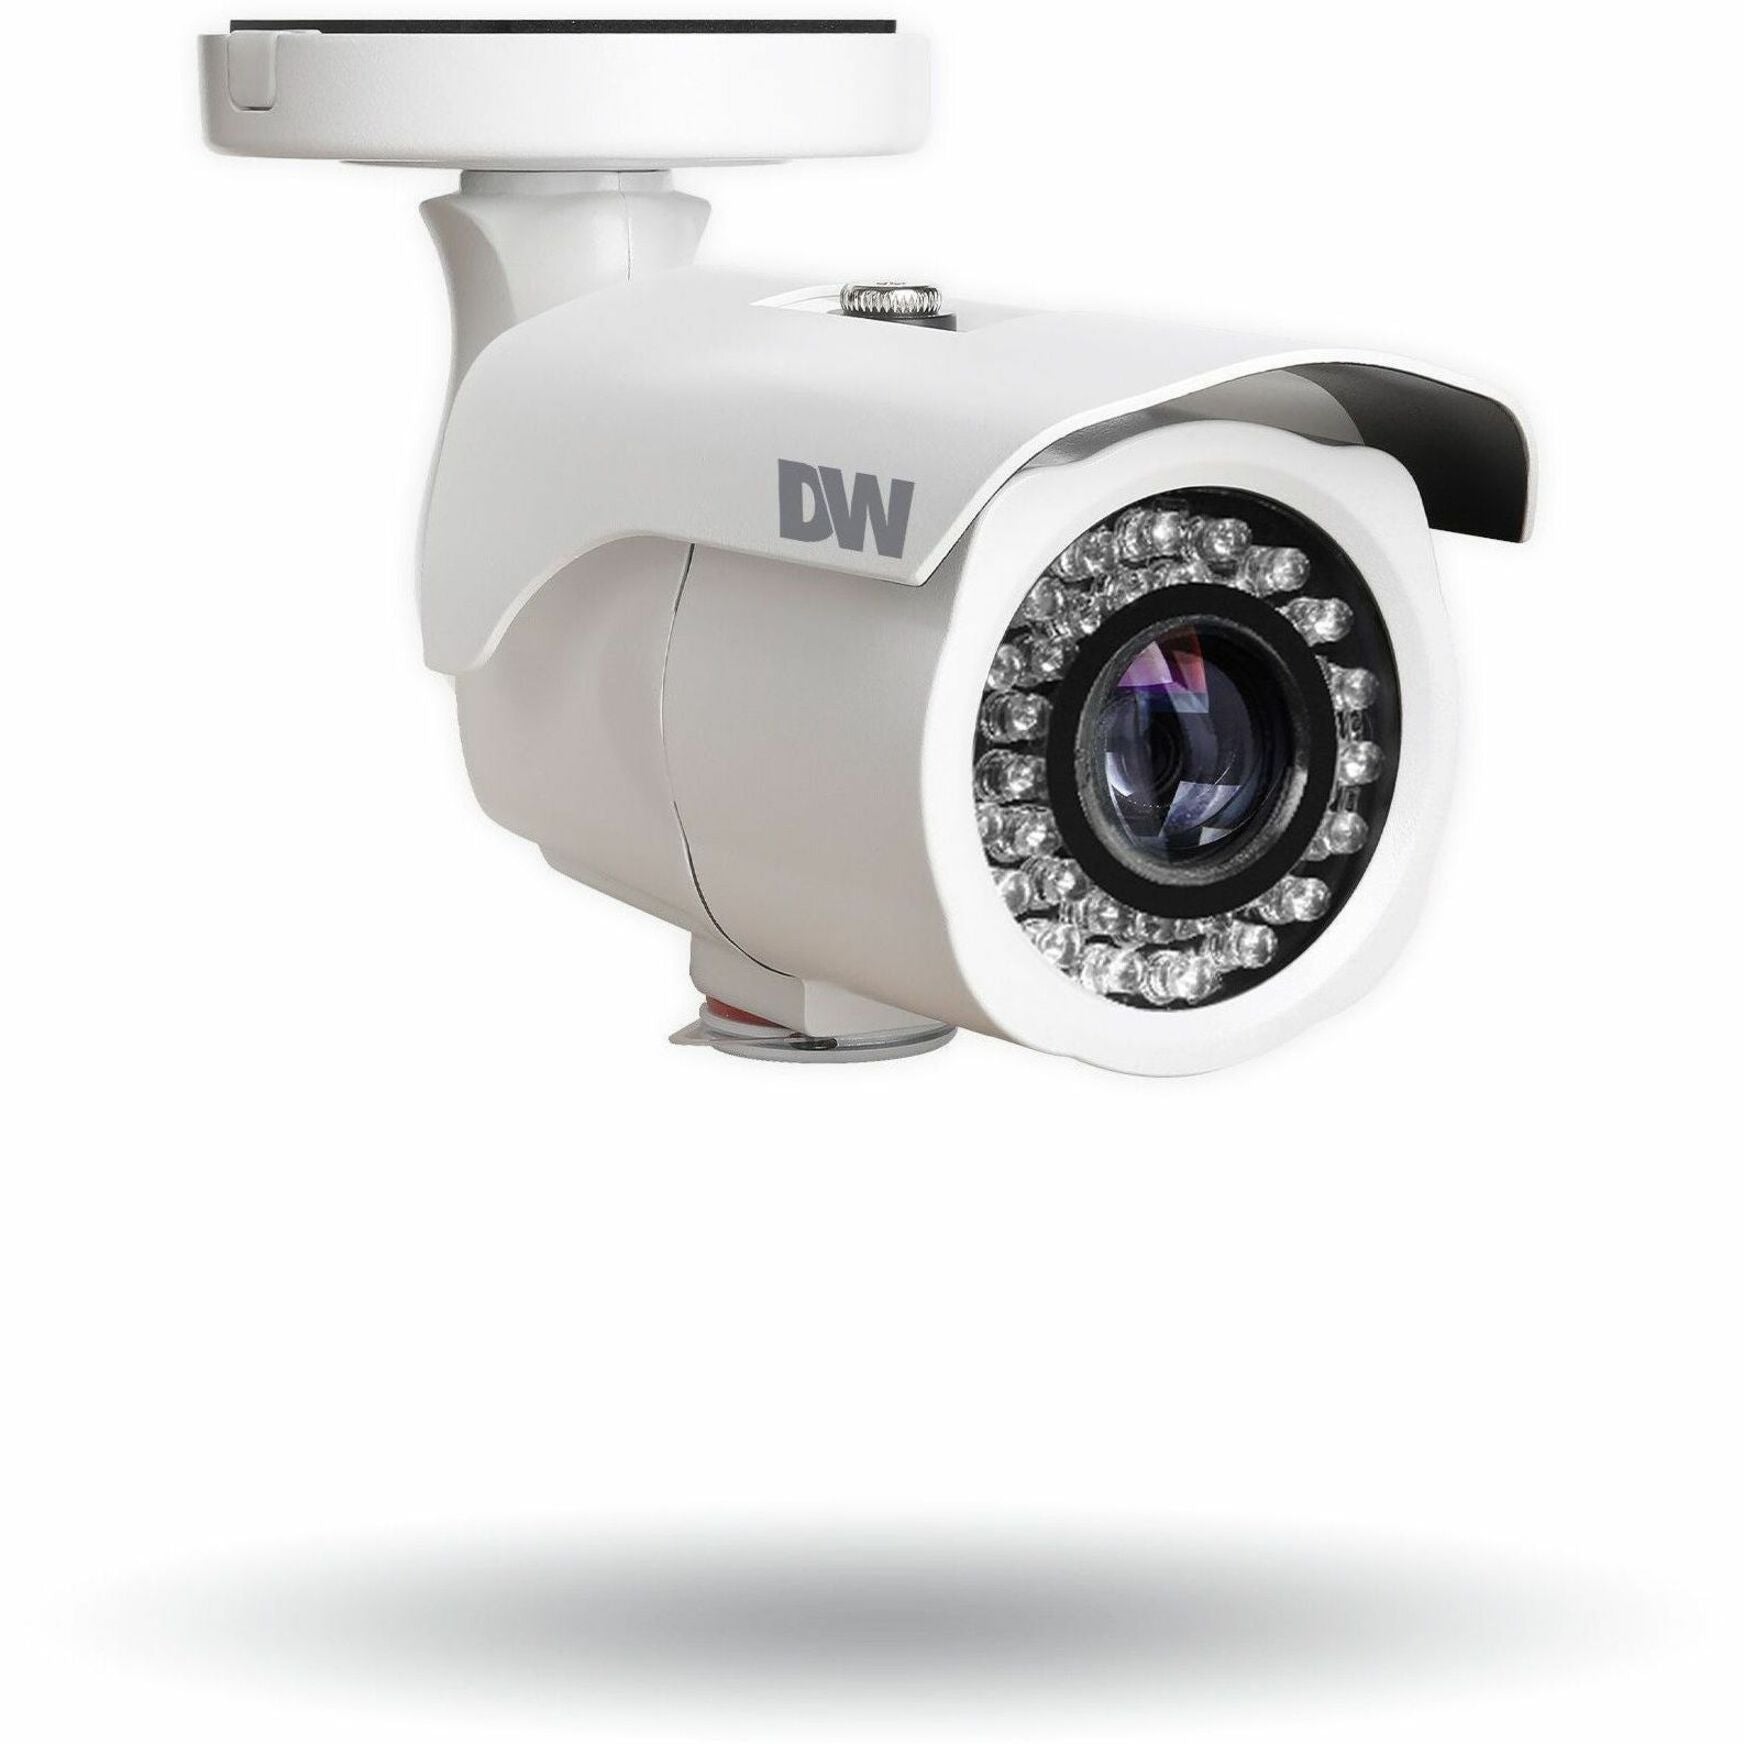 Digital Watchdog DWC-MB44WIAWC5 MEGApix CaaS 4MP bullet IP camera with a vari-focal lens and IR, 512GB